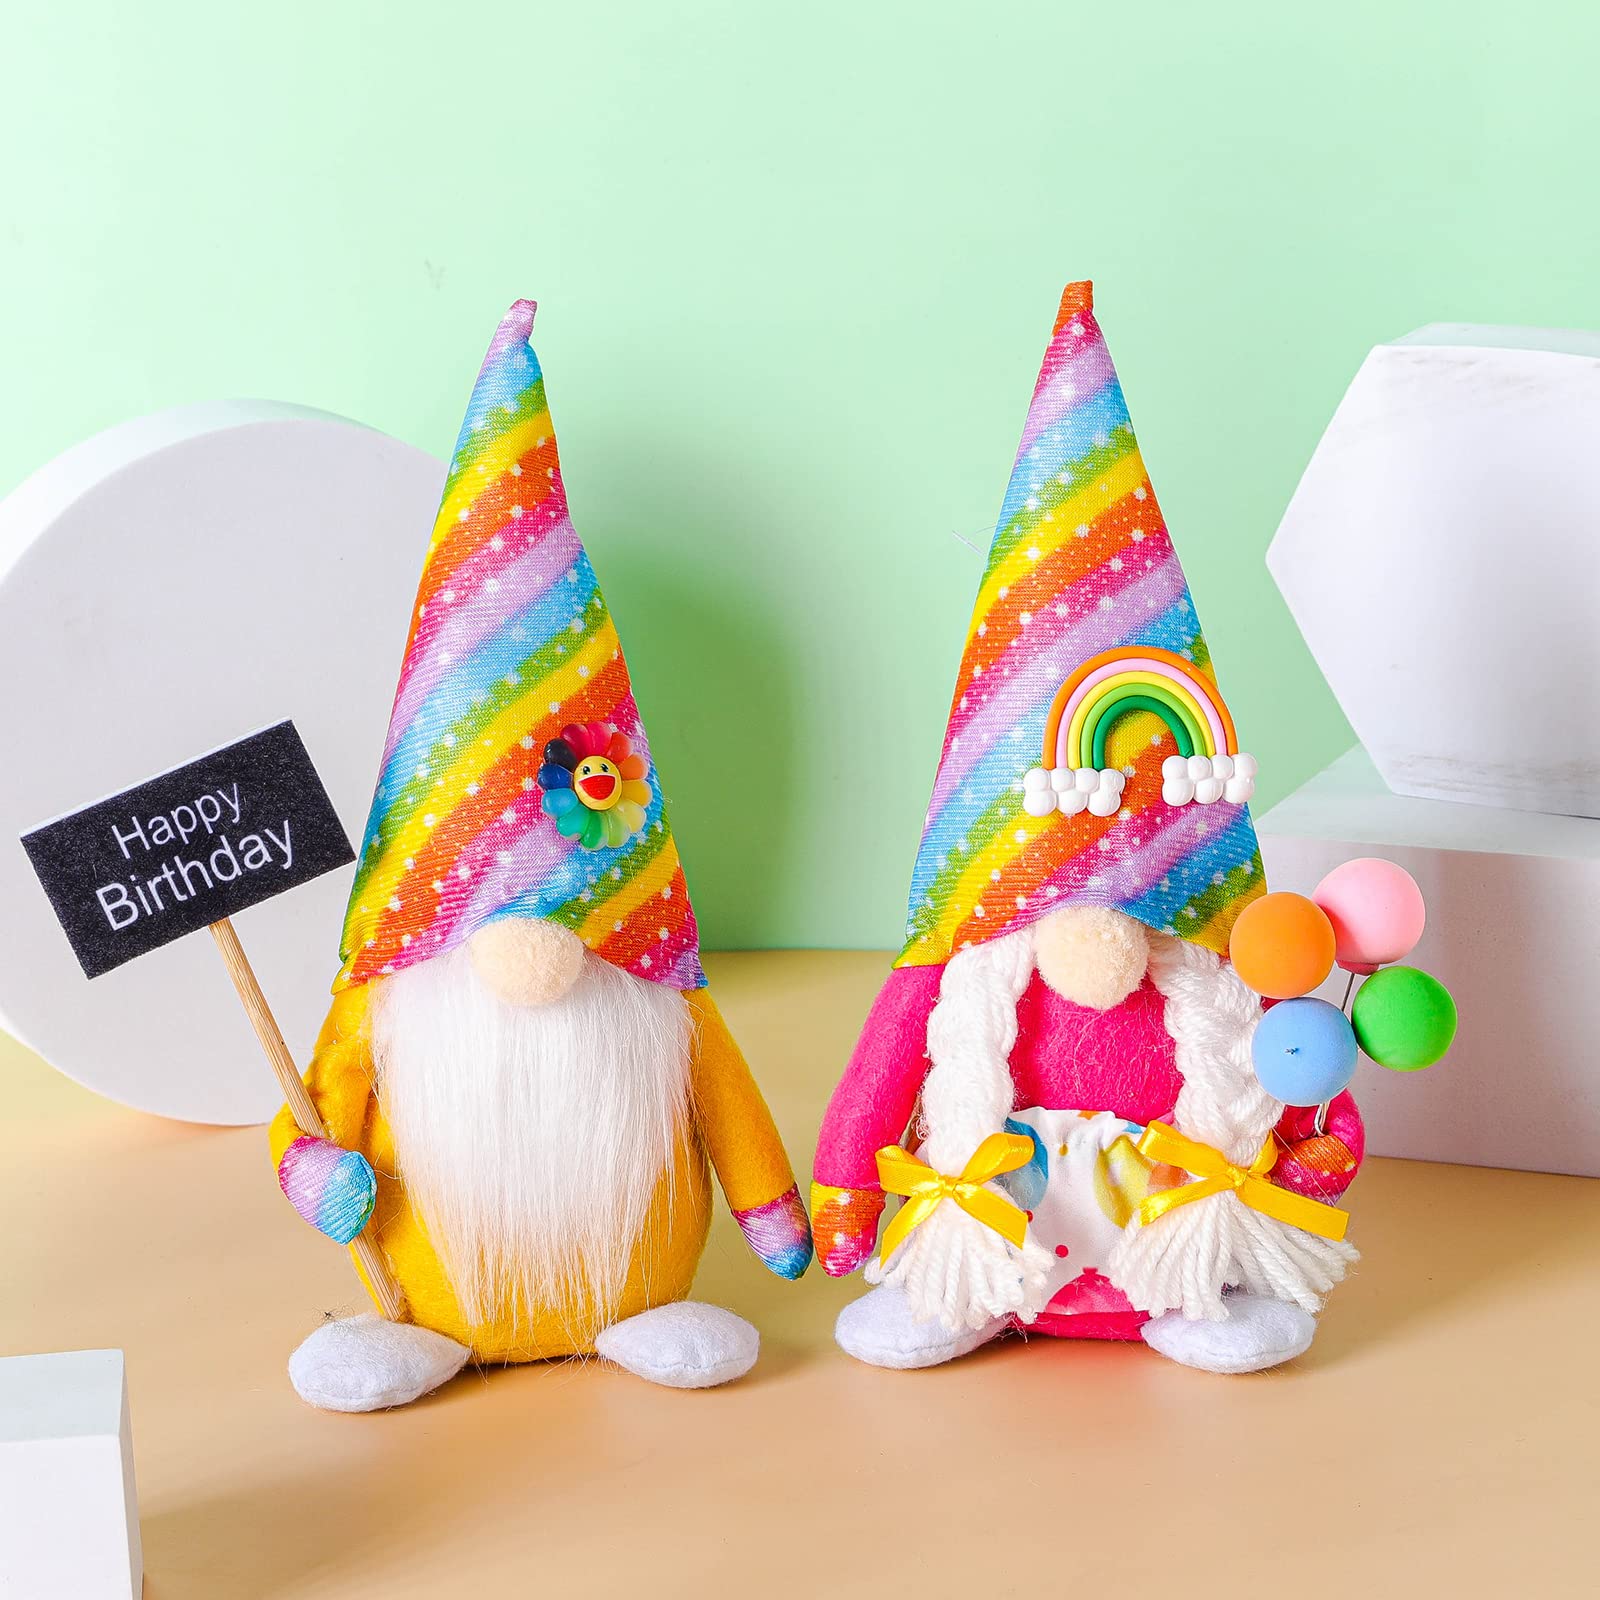 Happy Birthday - Lovely Rainbow Hat Gnome Couple